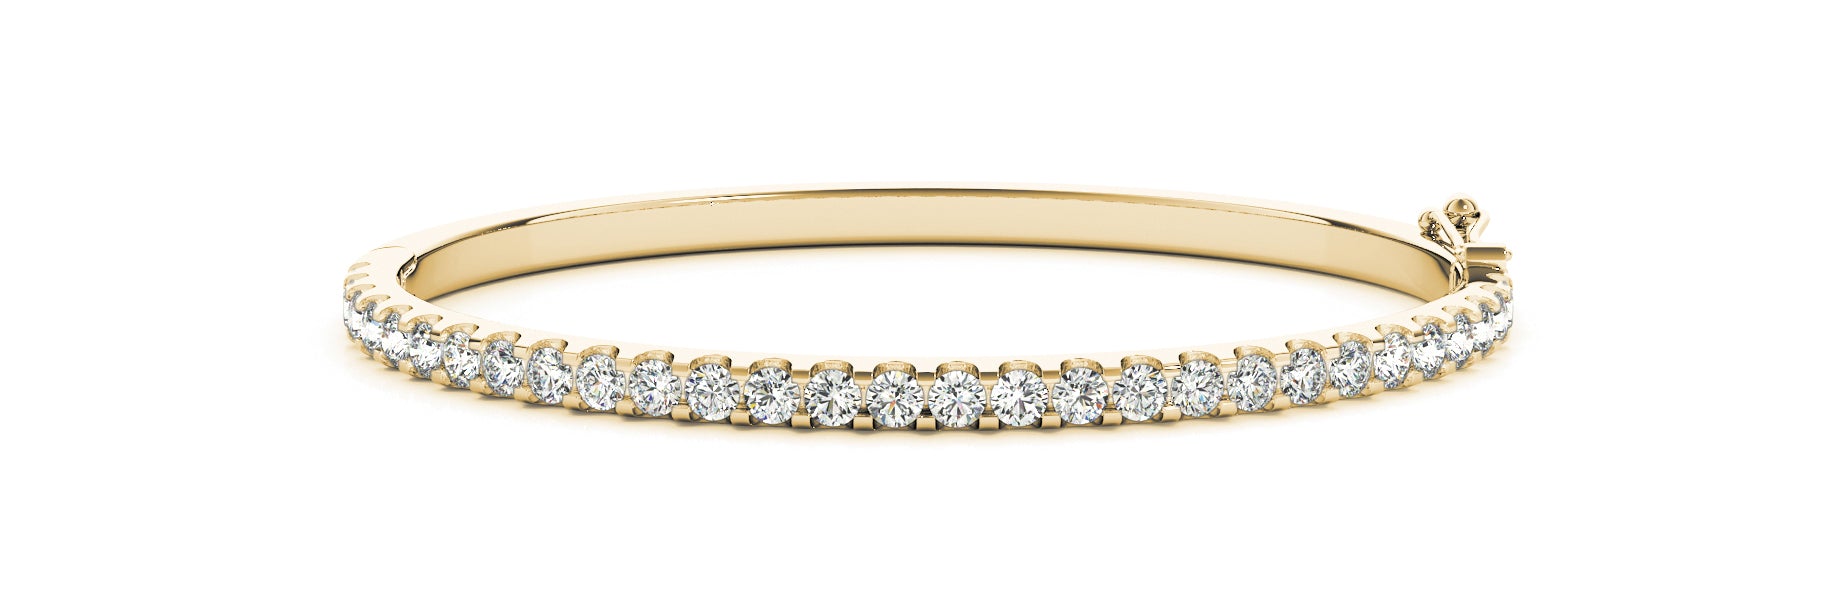 Diamond Bangle Bracelet Round Shaped 4 Carat in 14K & 18K Yellow Gold Front View